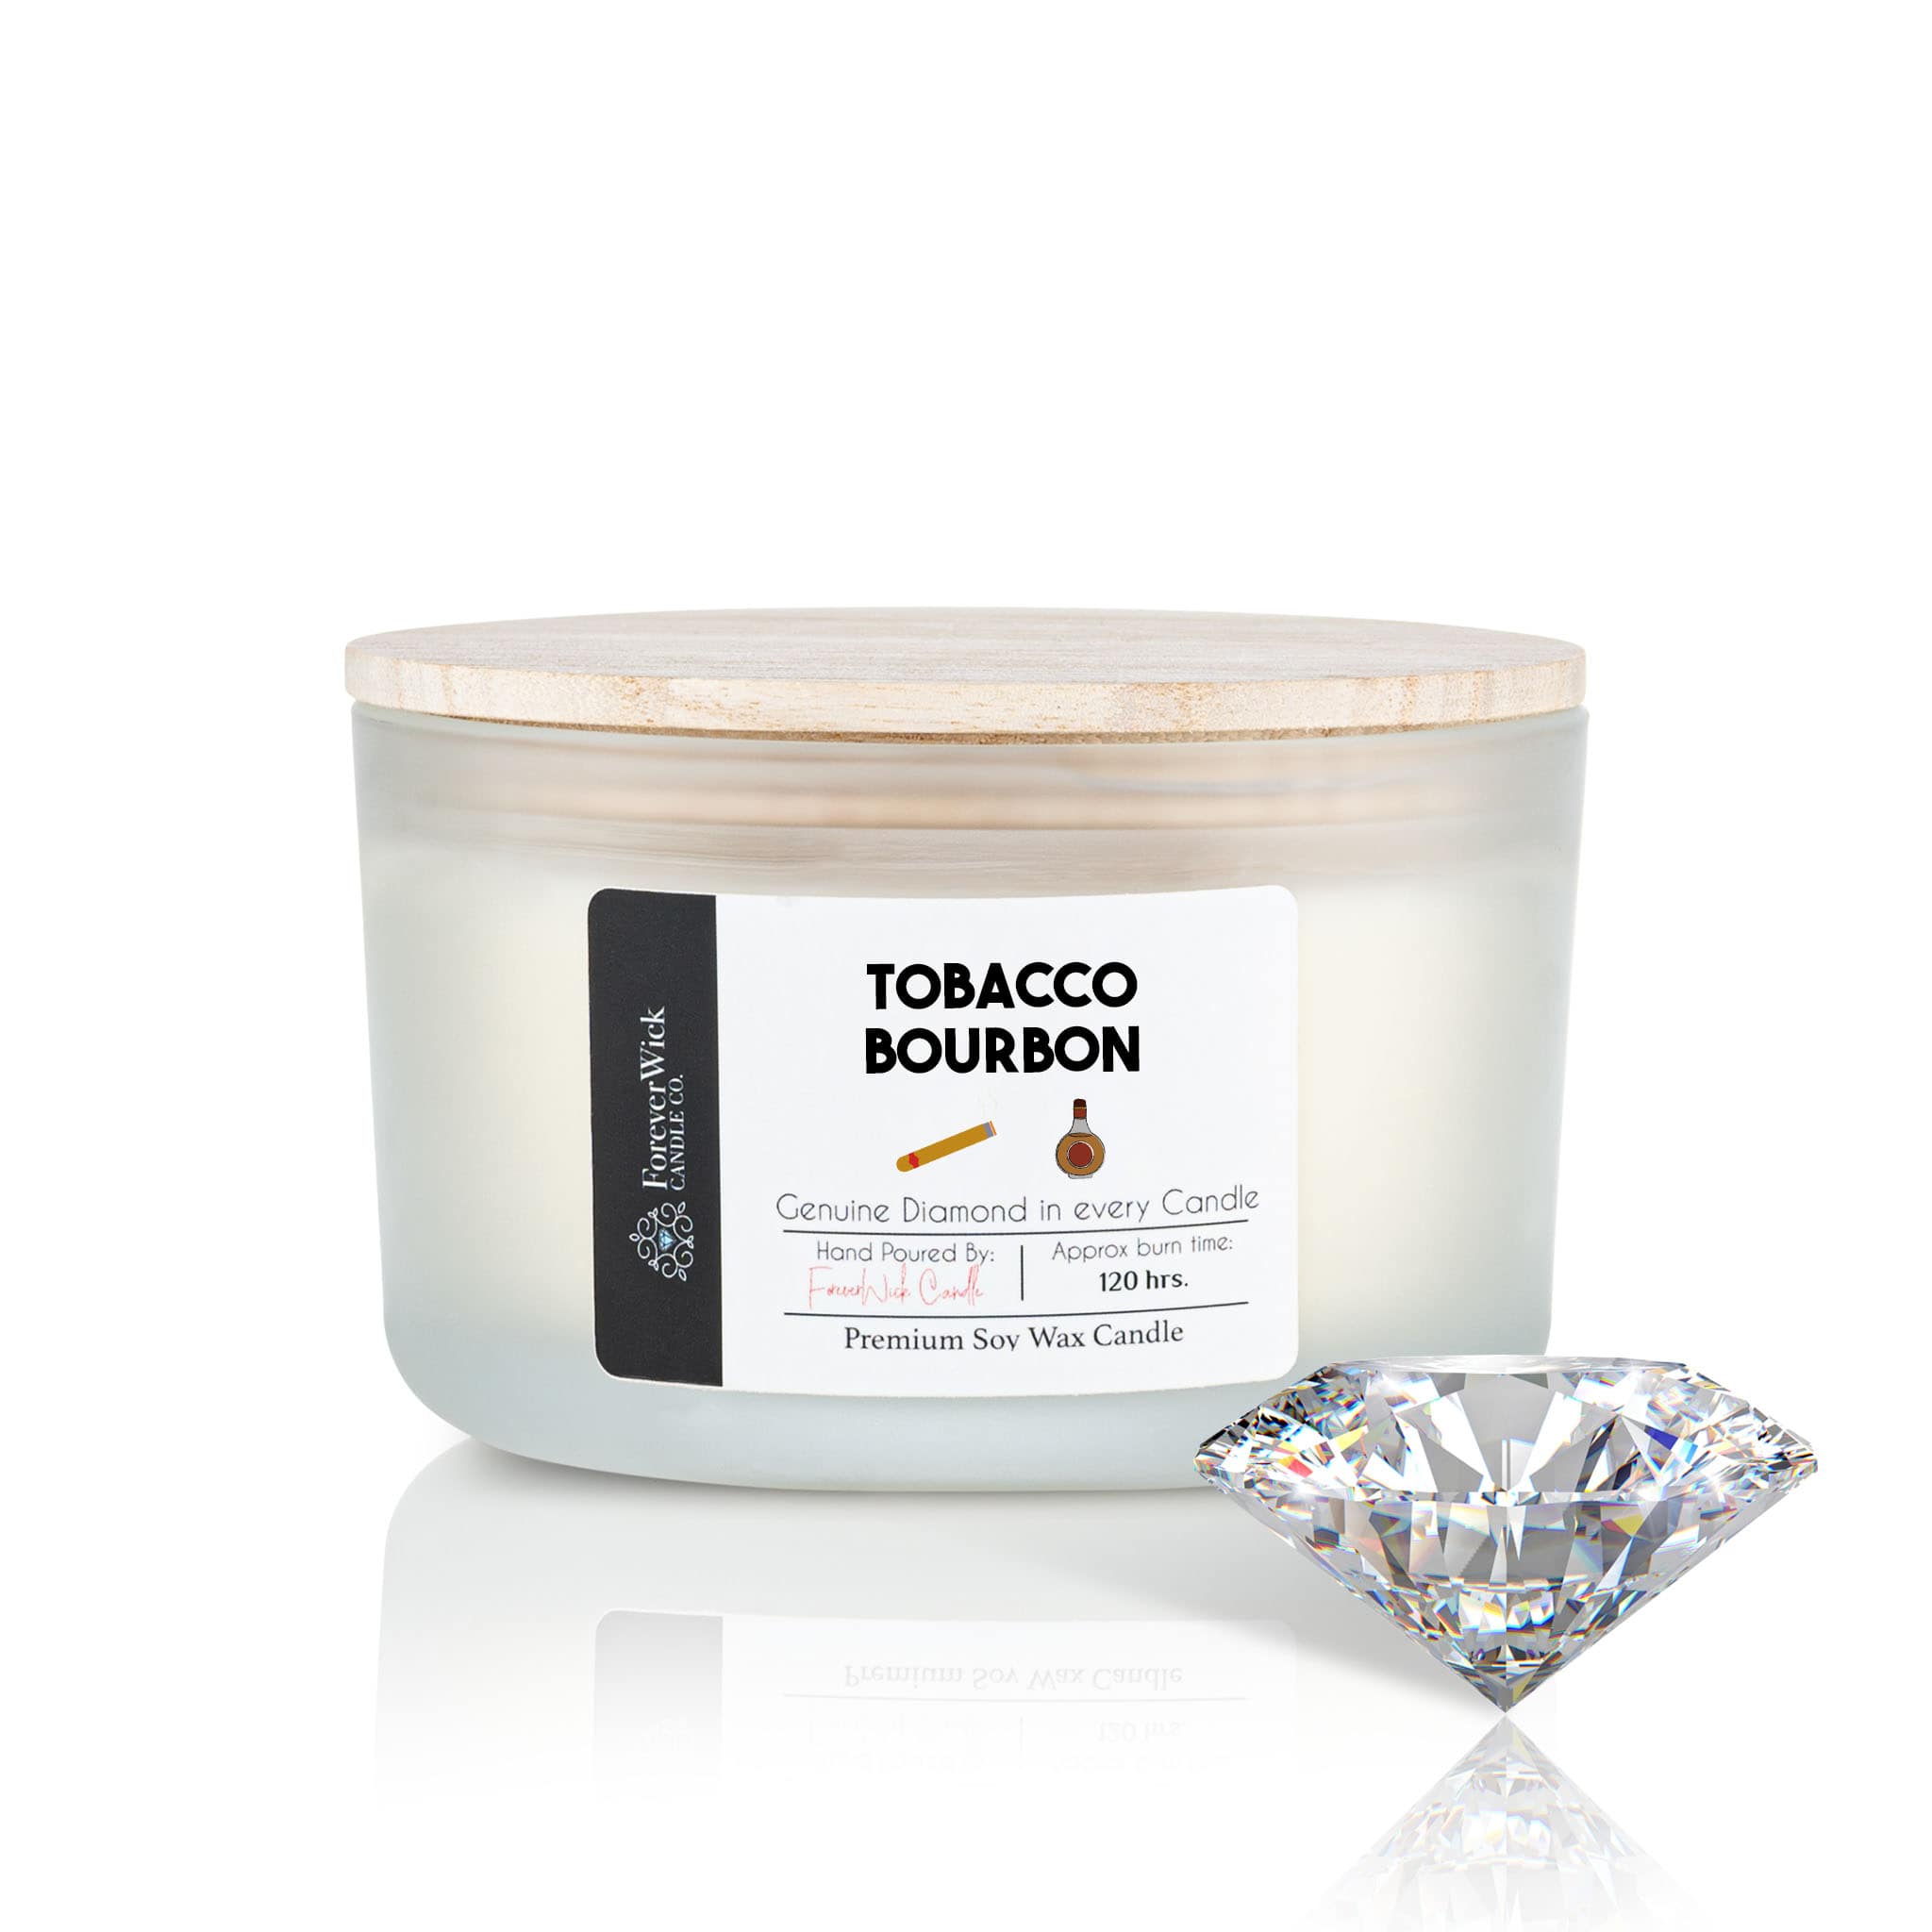 Tobacco Bourbon 4 Wick Diamond Candle